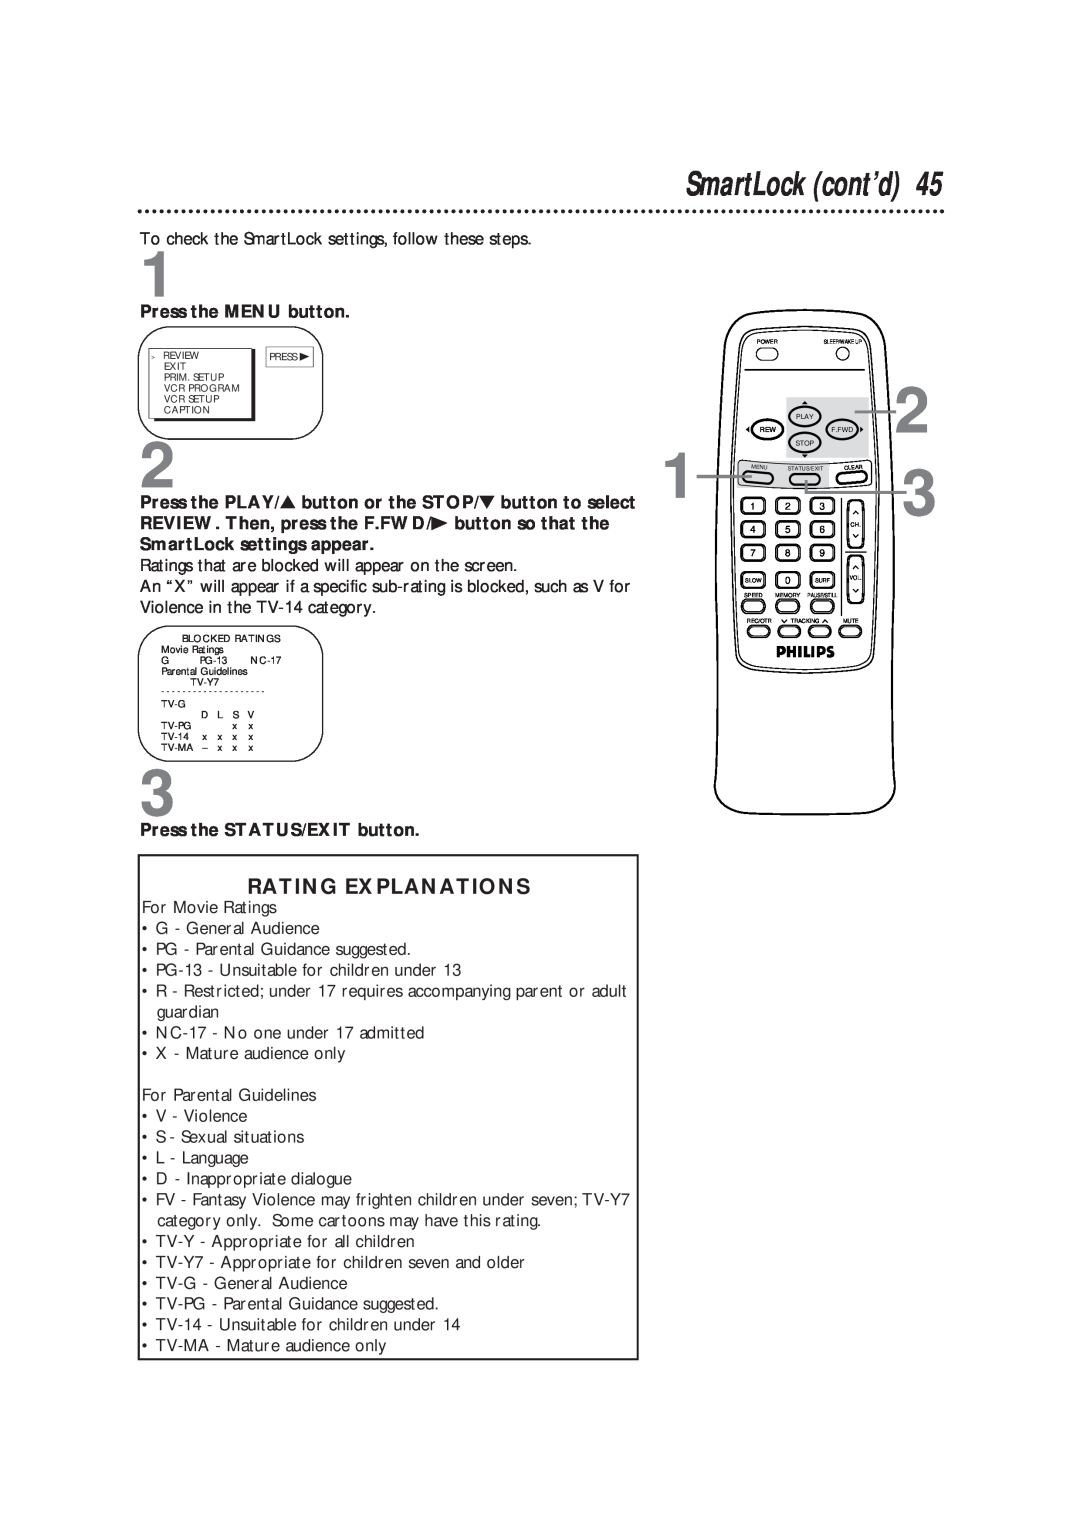 Magnavox CCB193AT owner manual Rating Explanations, SmartLock cont’d 